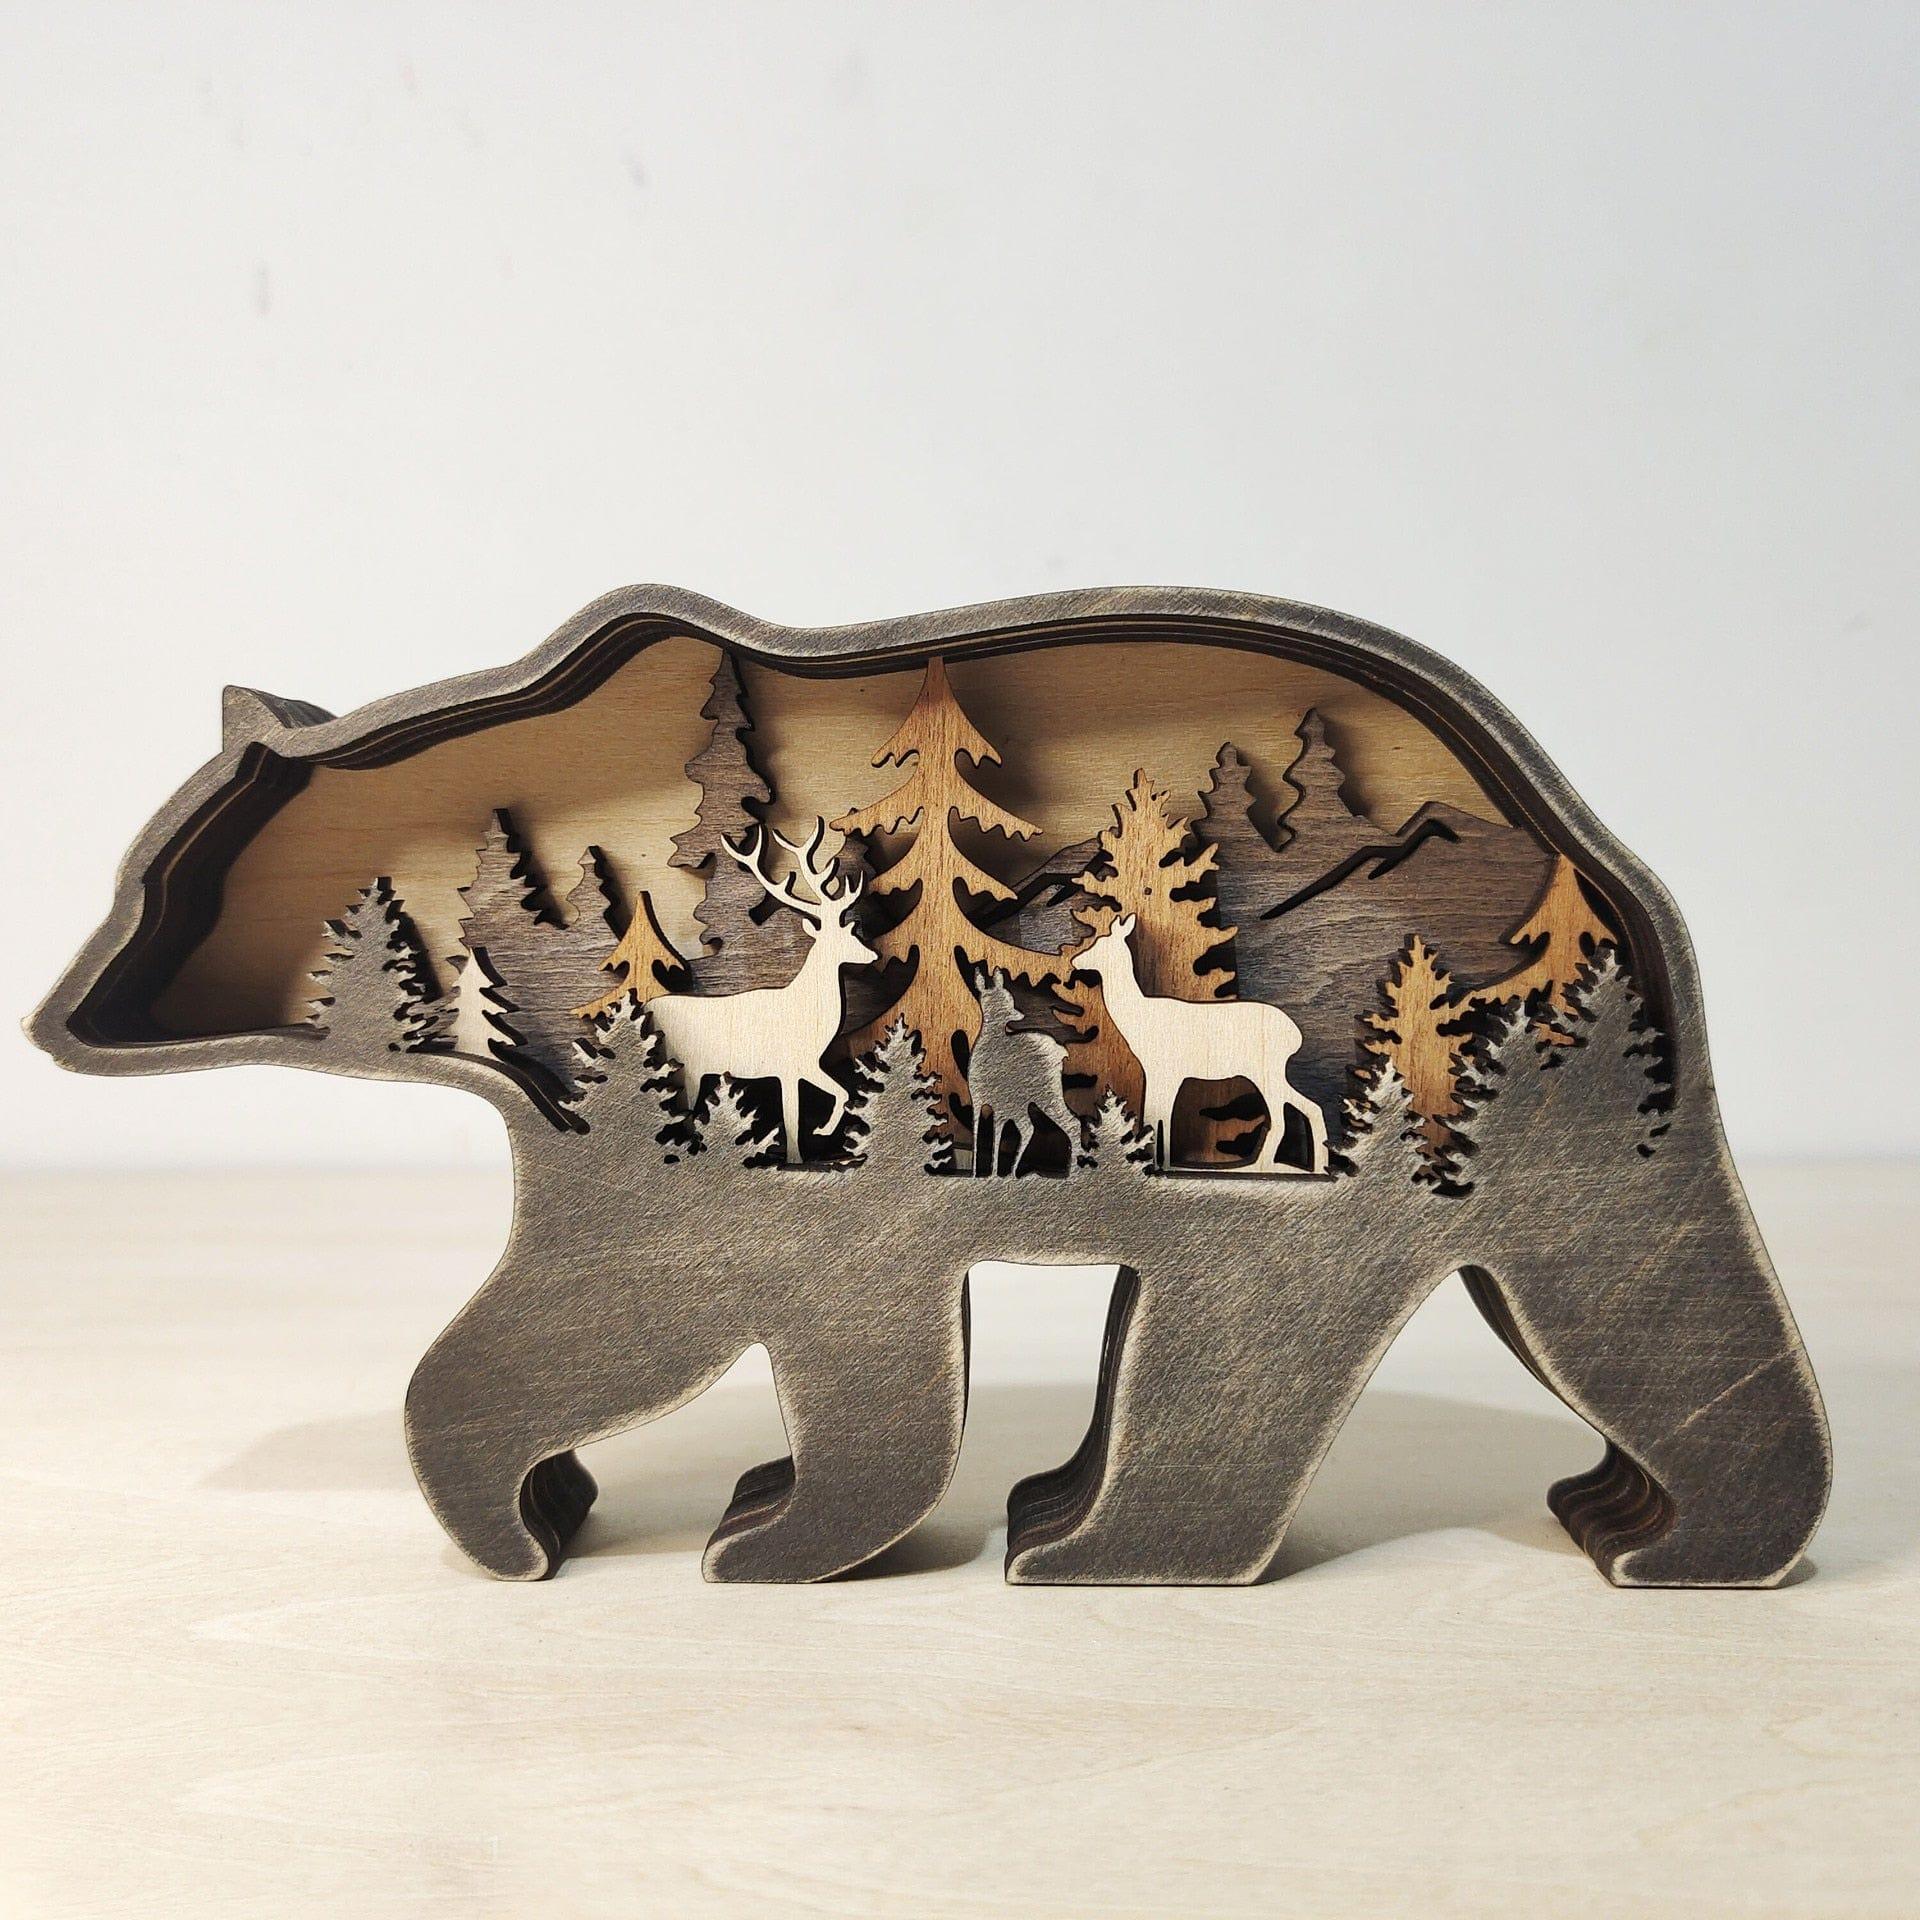 Shop 0 2021 Animal Bears Craft Figurine Desktop Table Ornament Carving Deer Model Creative Home Office Decoration Sculpture Mademoiselle Home Decor